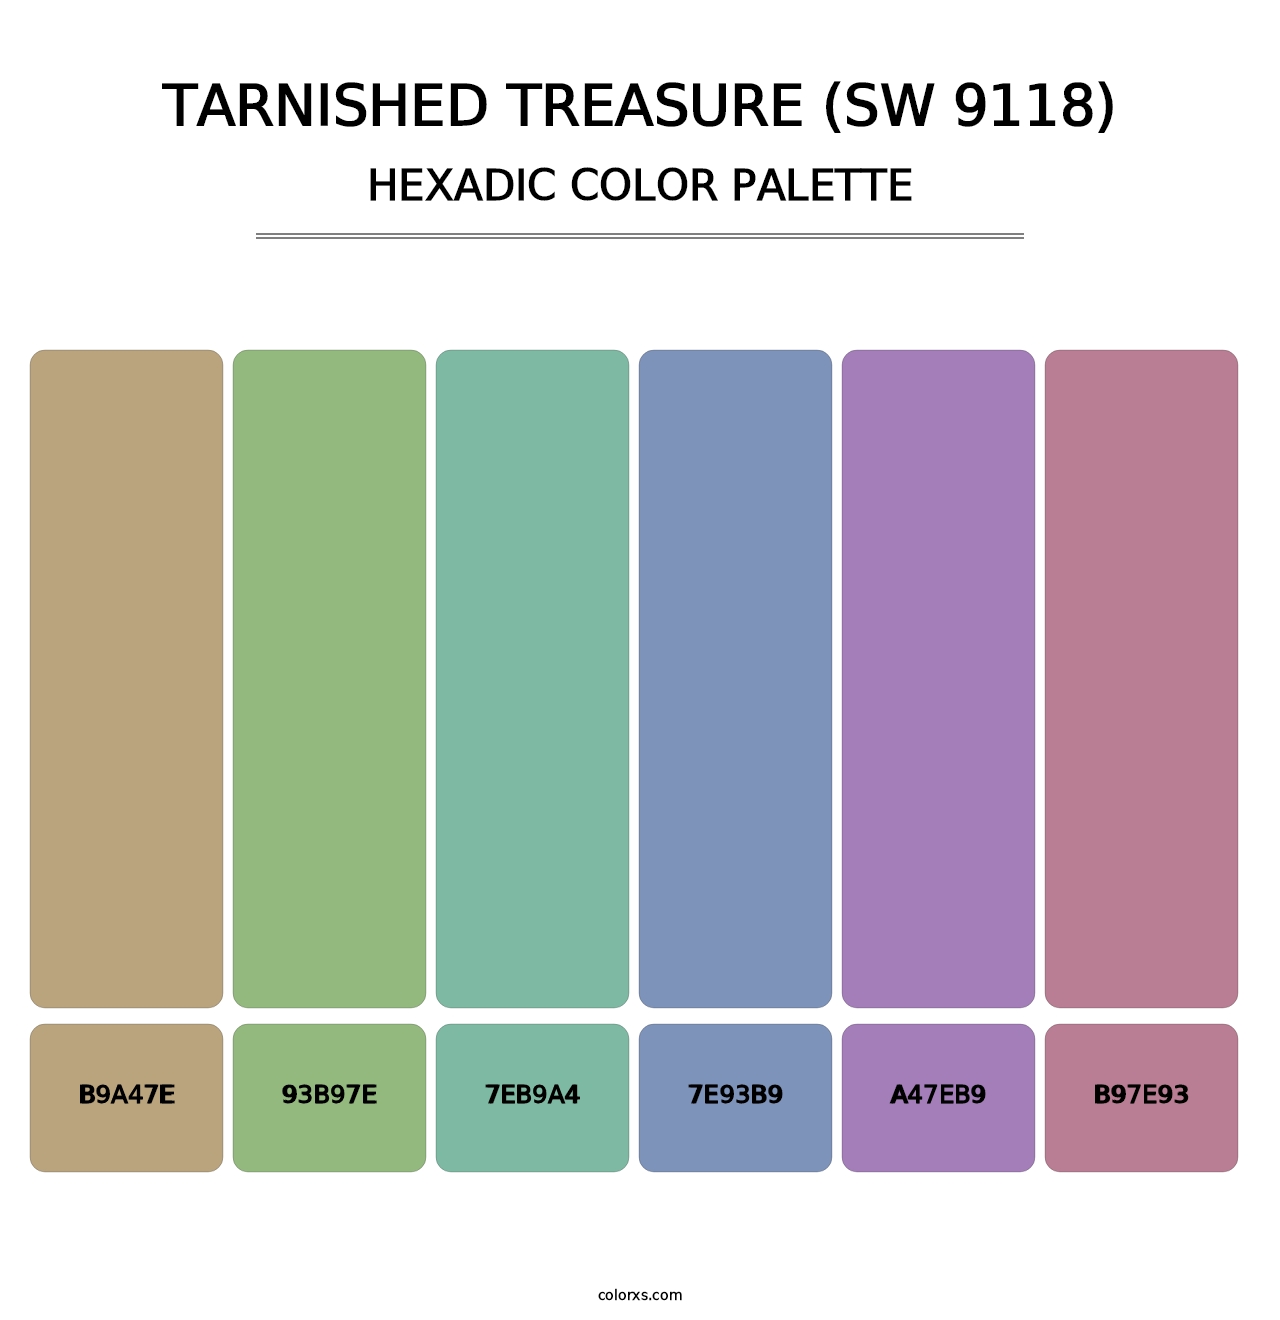 Tarnished Treasure (SW 9118) - Hexadic Color Palette